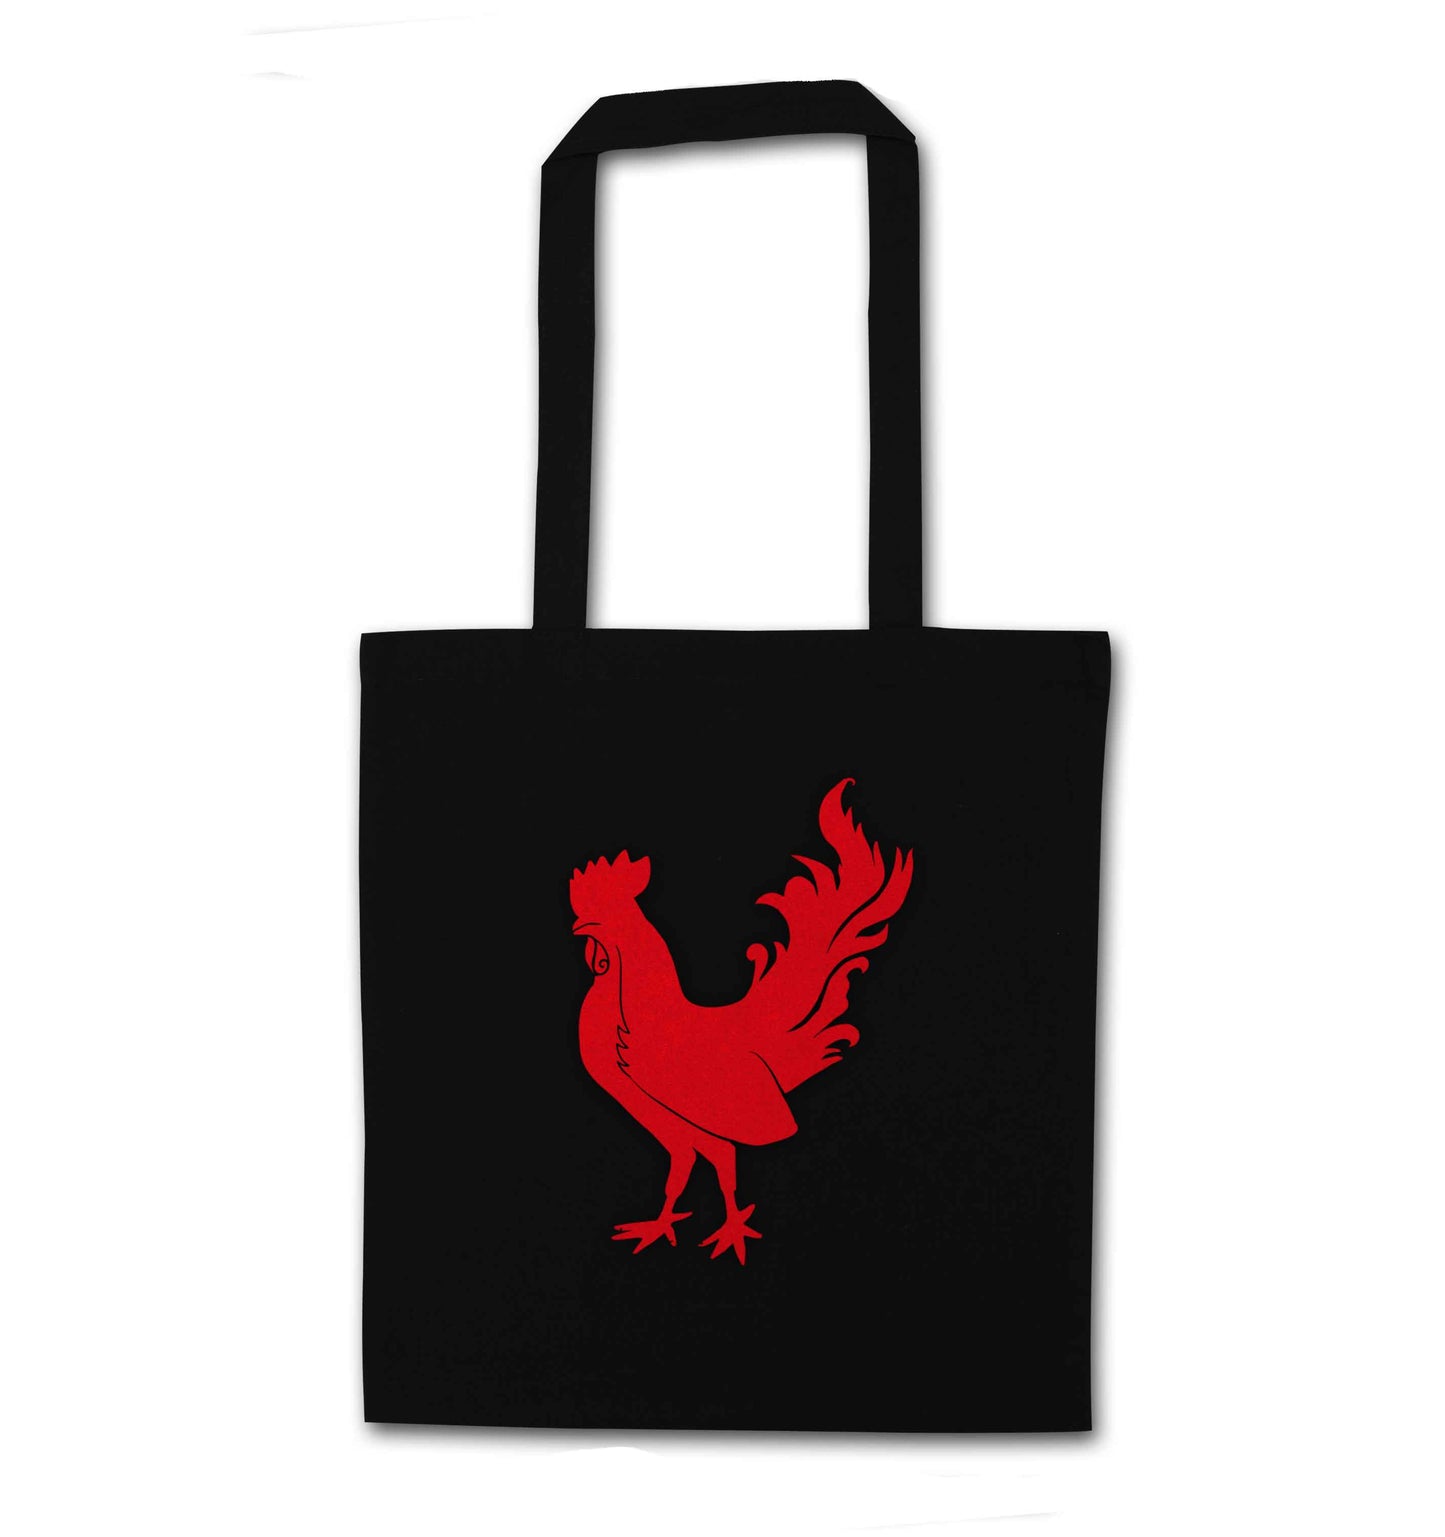 Rooster black tote bag